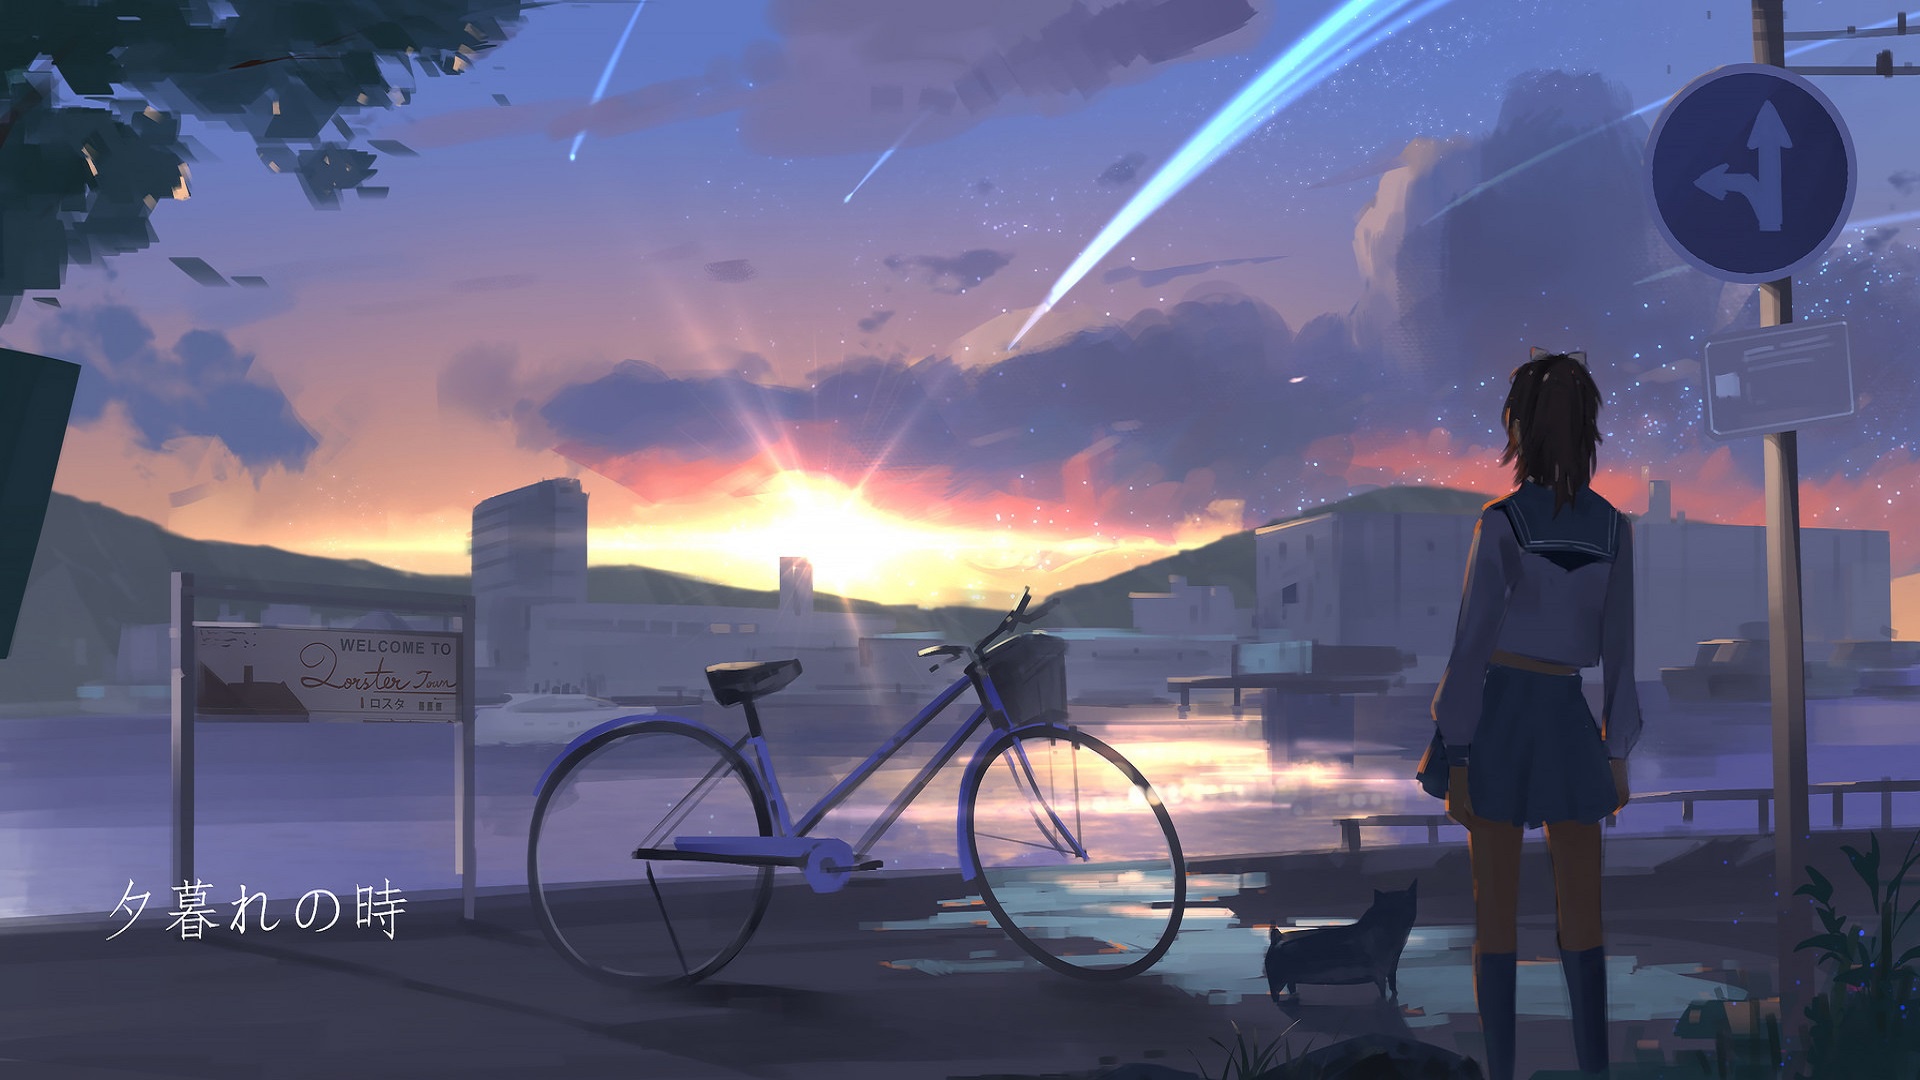 Anime 1920x1080 anime anime girls women outdoors urban sky standing vehicle bicycle city Sun signs school uniform ArtStation